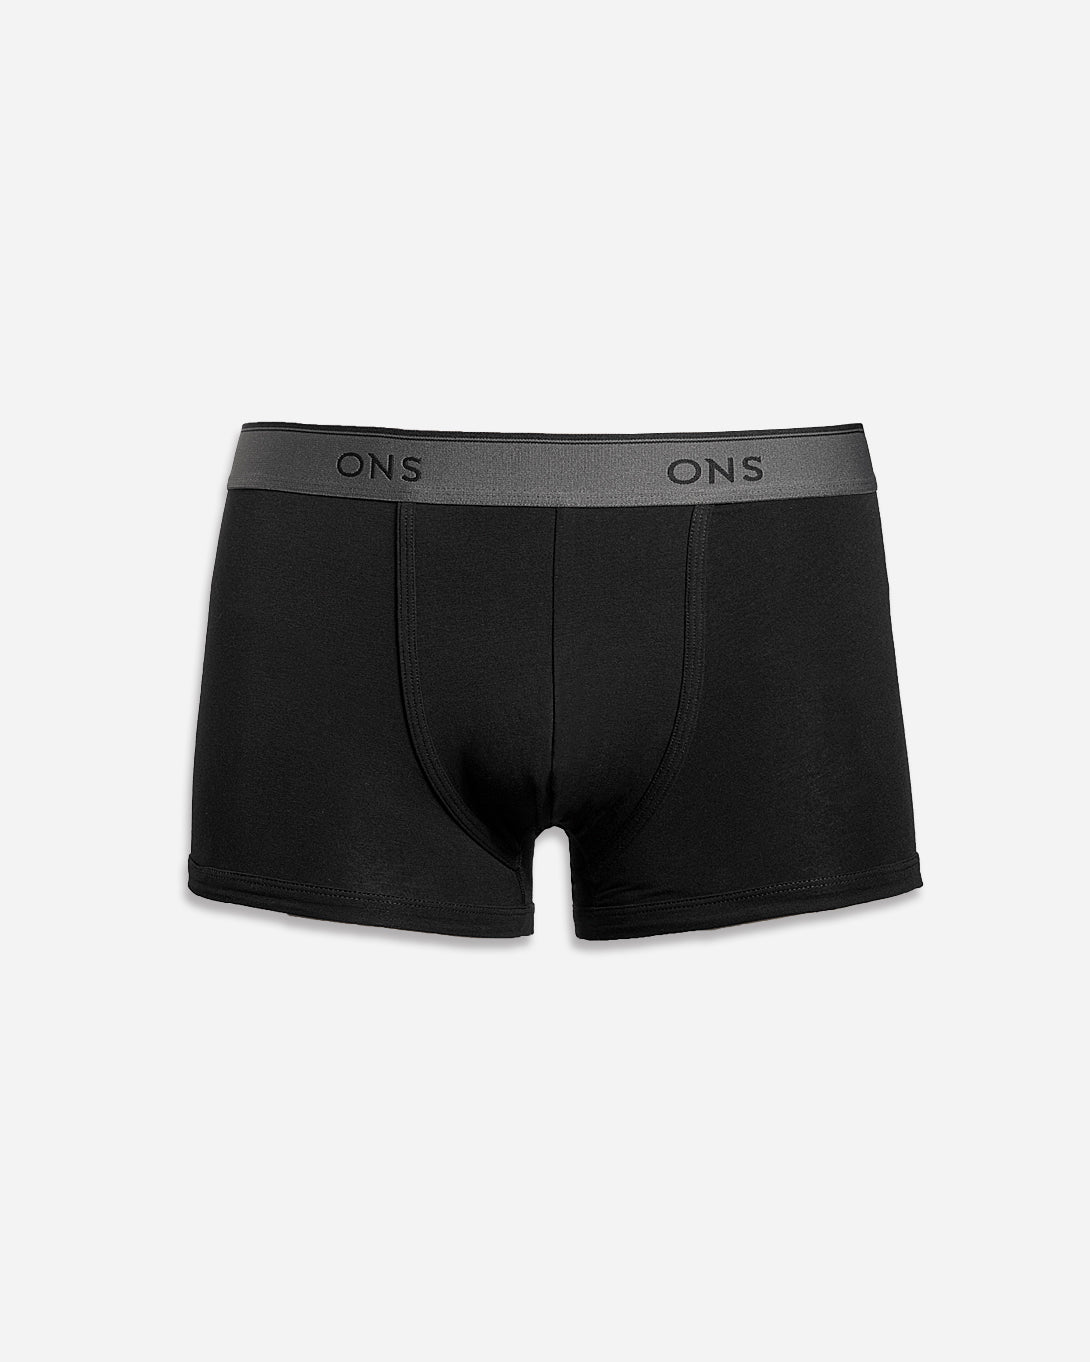 Black Boxer Brief 2 Pieces ONS Clothing Mens Essential Underwear